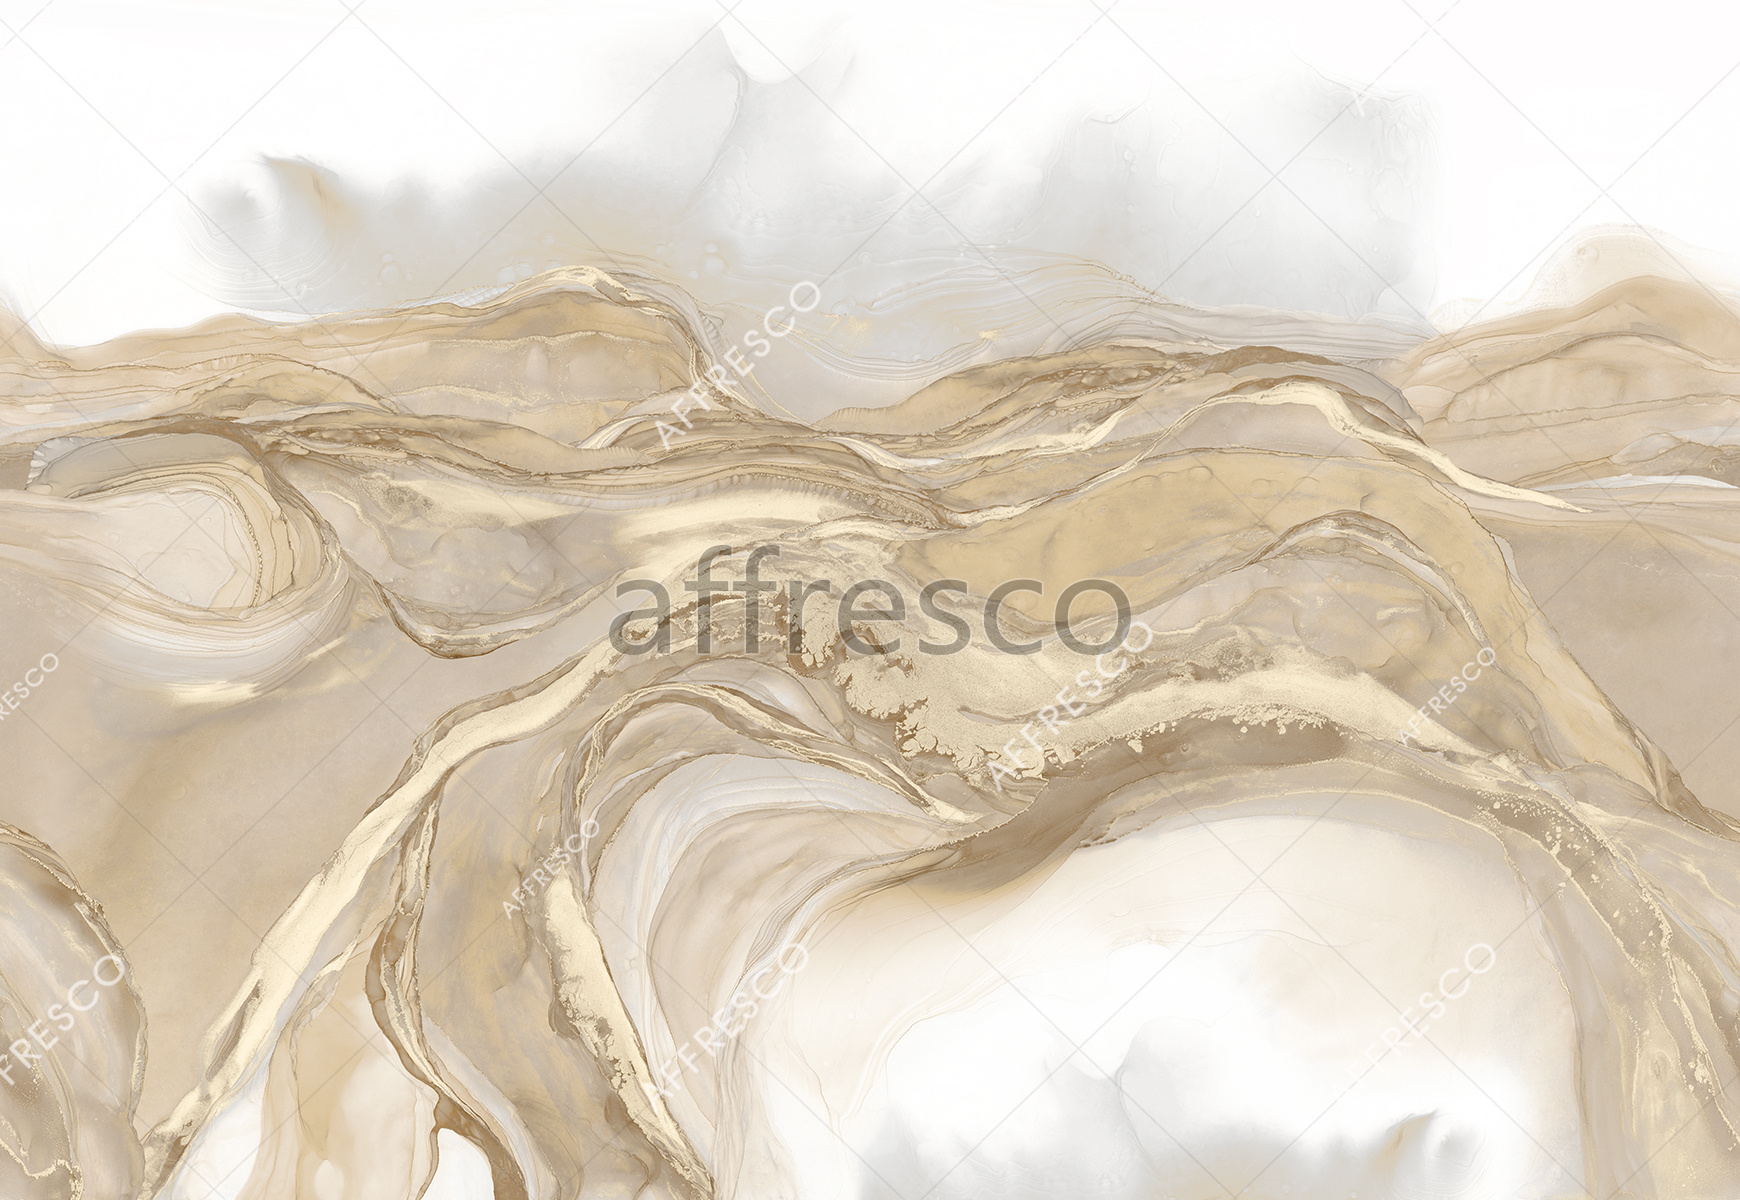 ID138760 | Textures |  | Affresco Factory